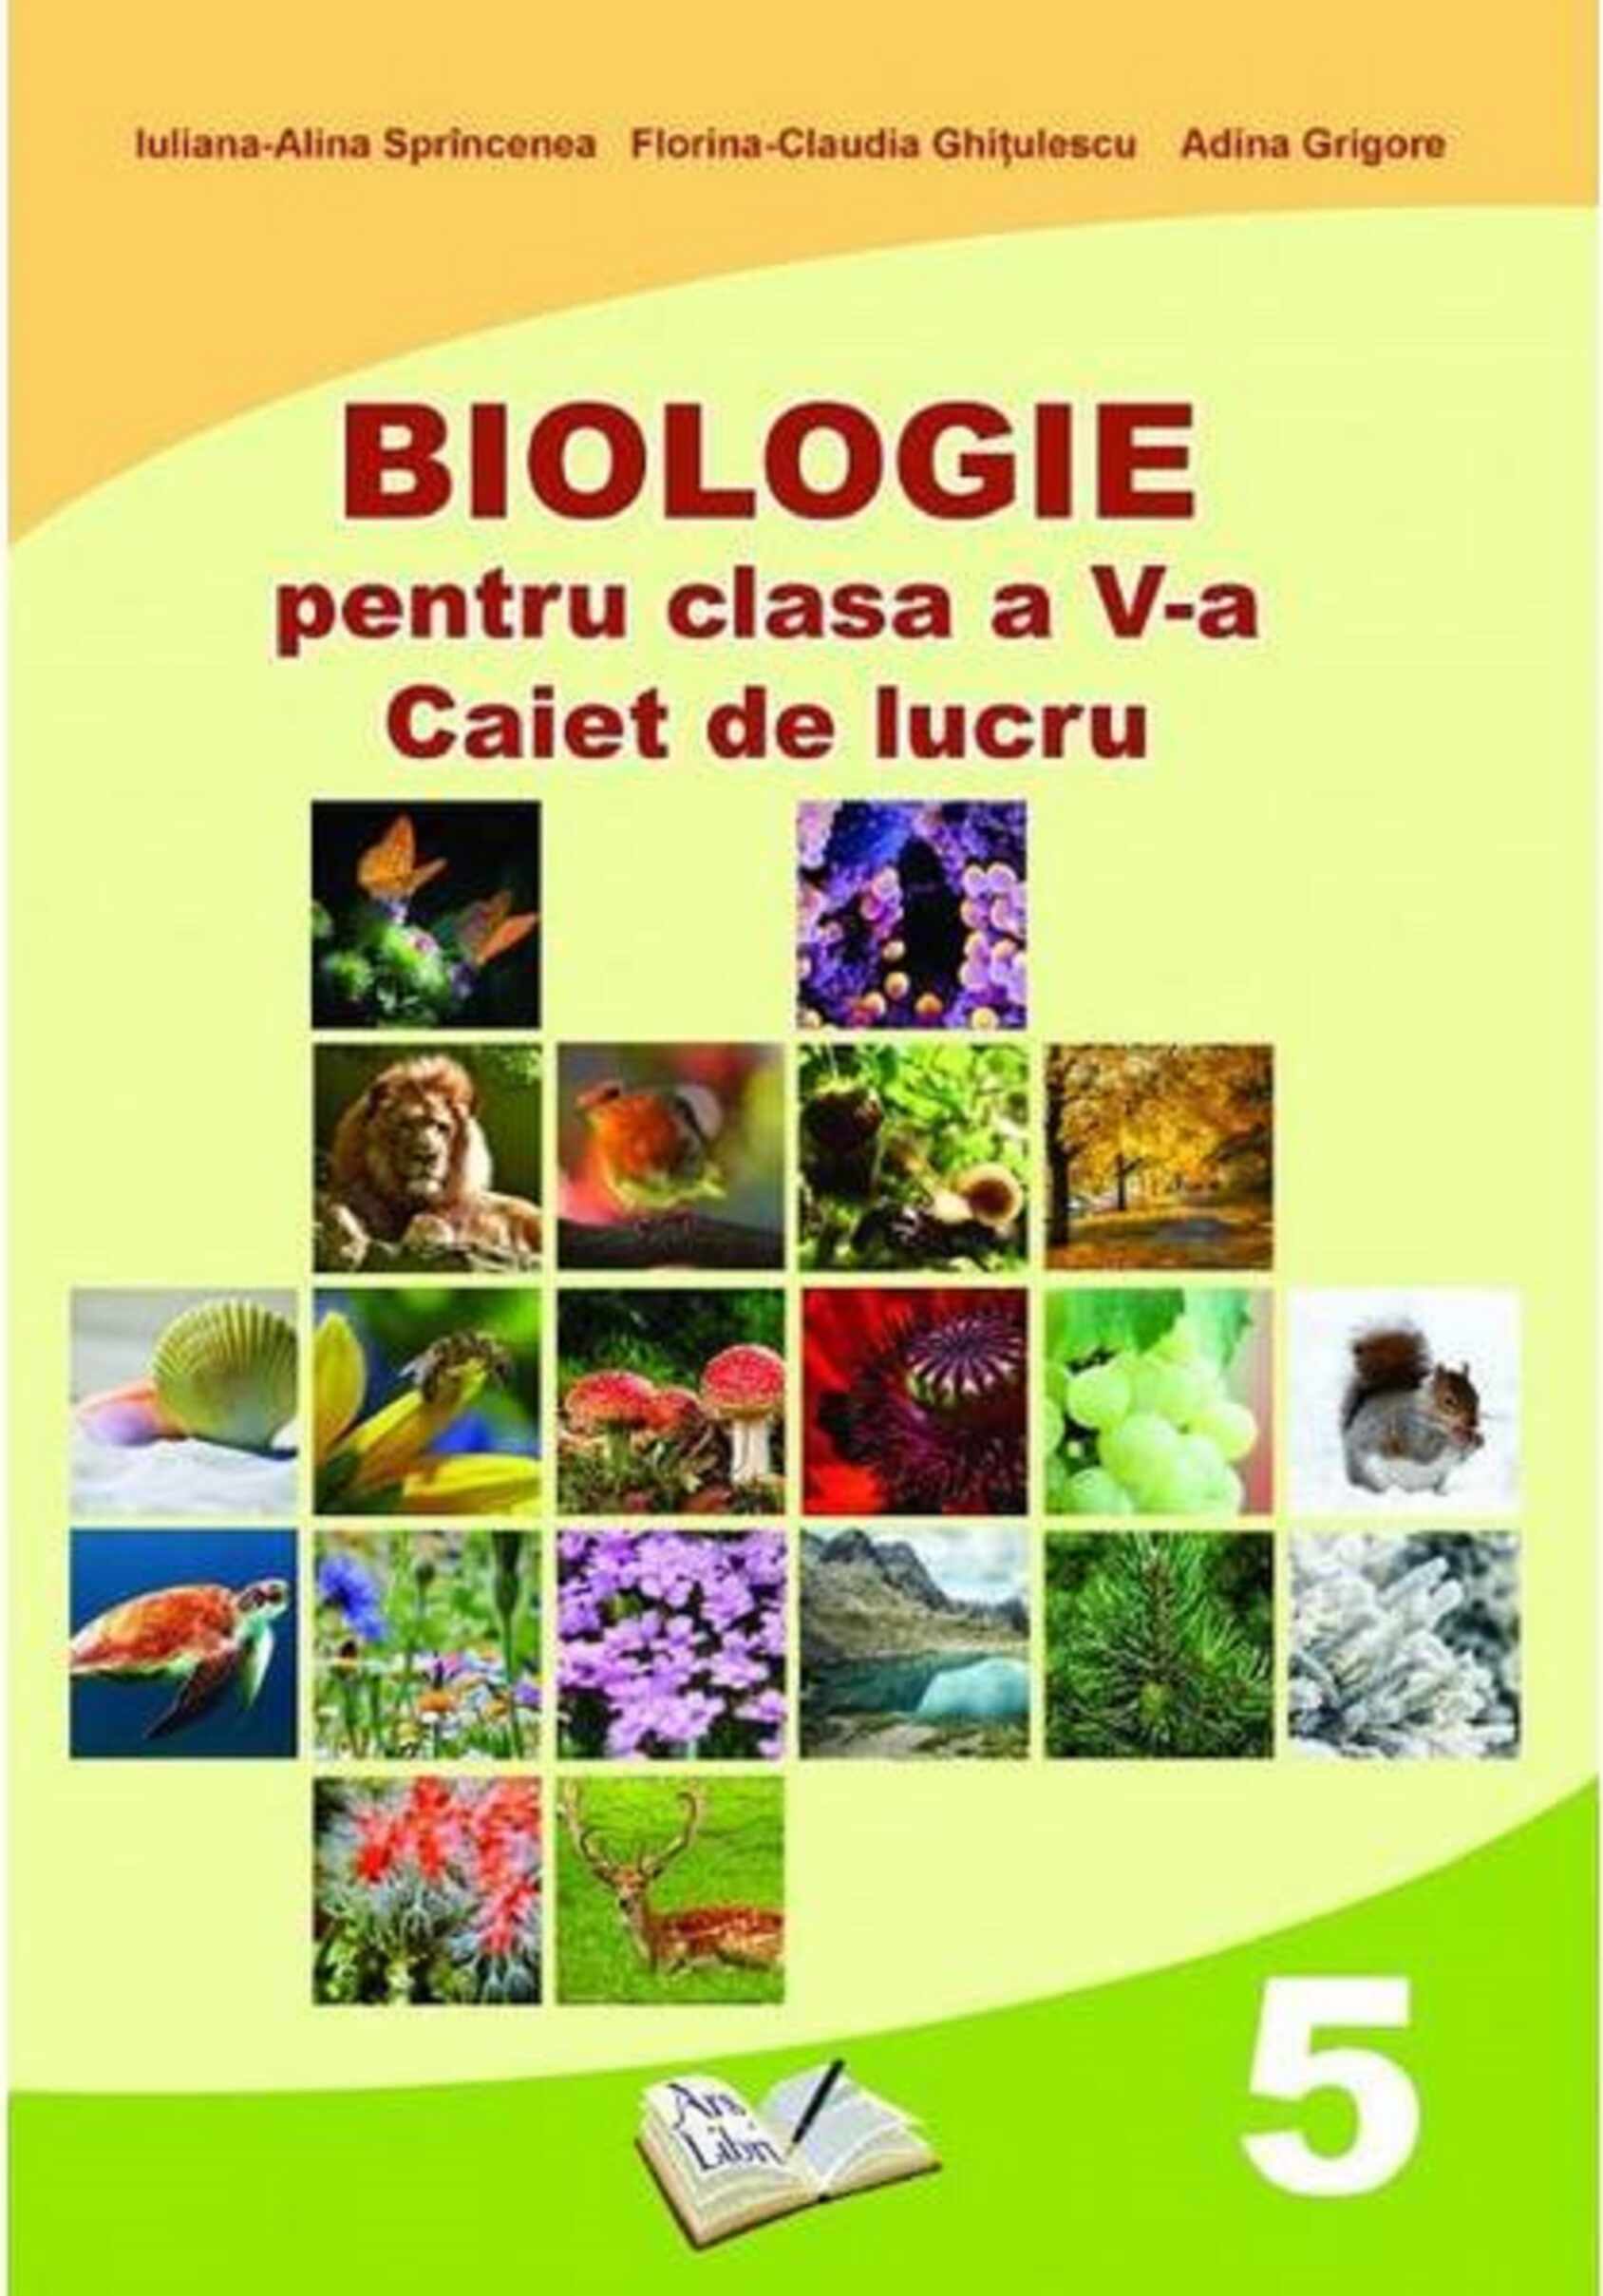 Biologie pentru clasa a V-a. Caiet de lucru | Iuliana-Alina Sprincenea, Florina-Claudia Ghitulescu, Adina Grigore